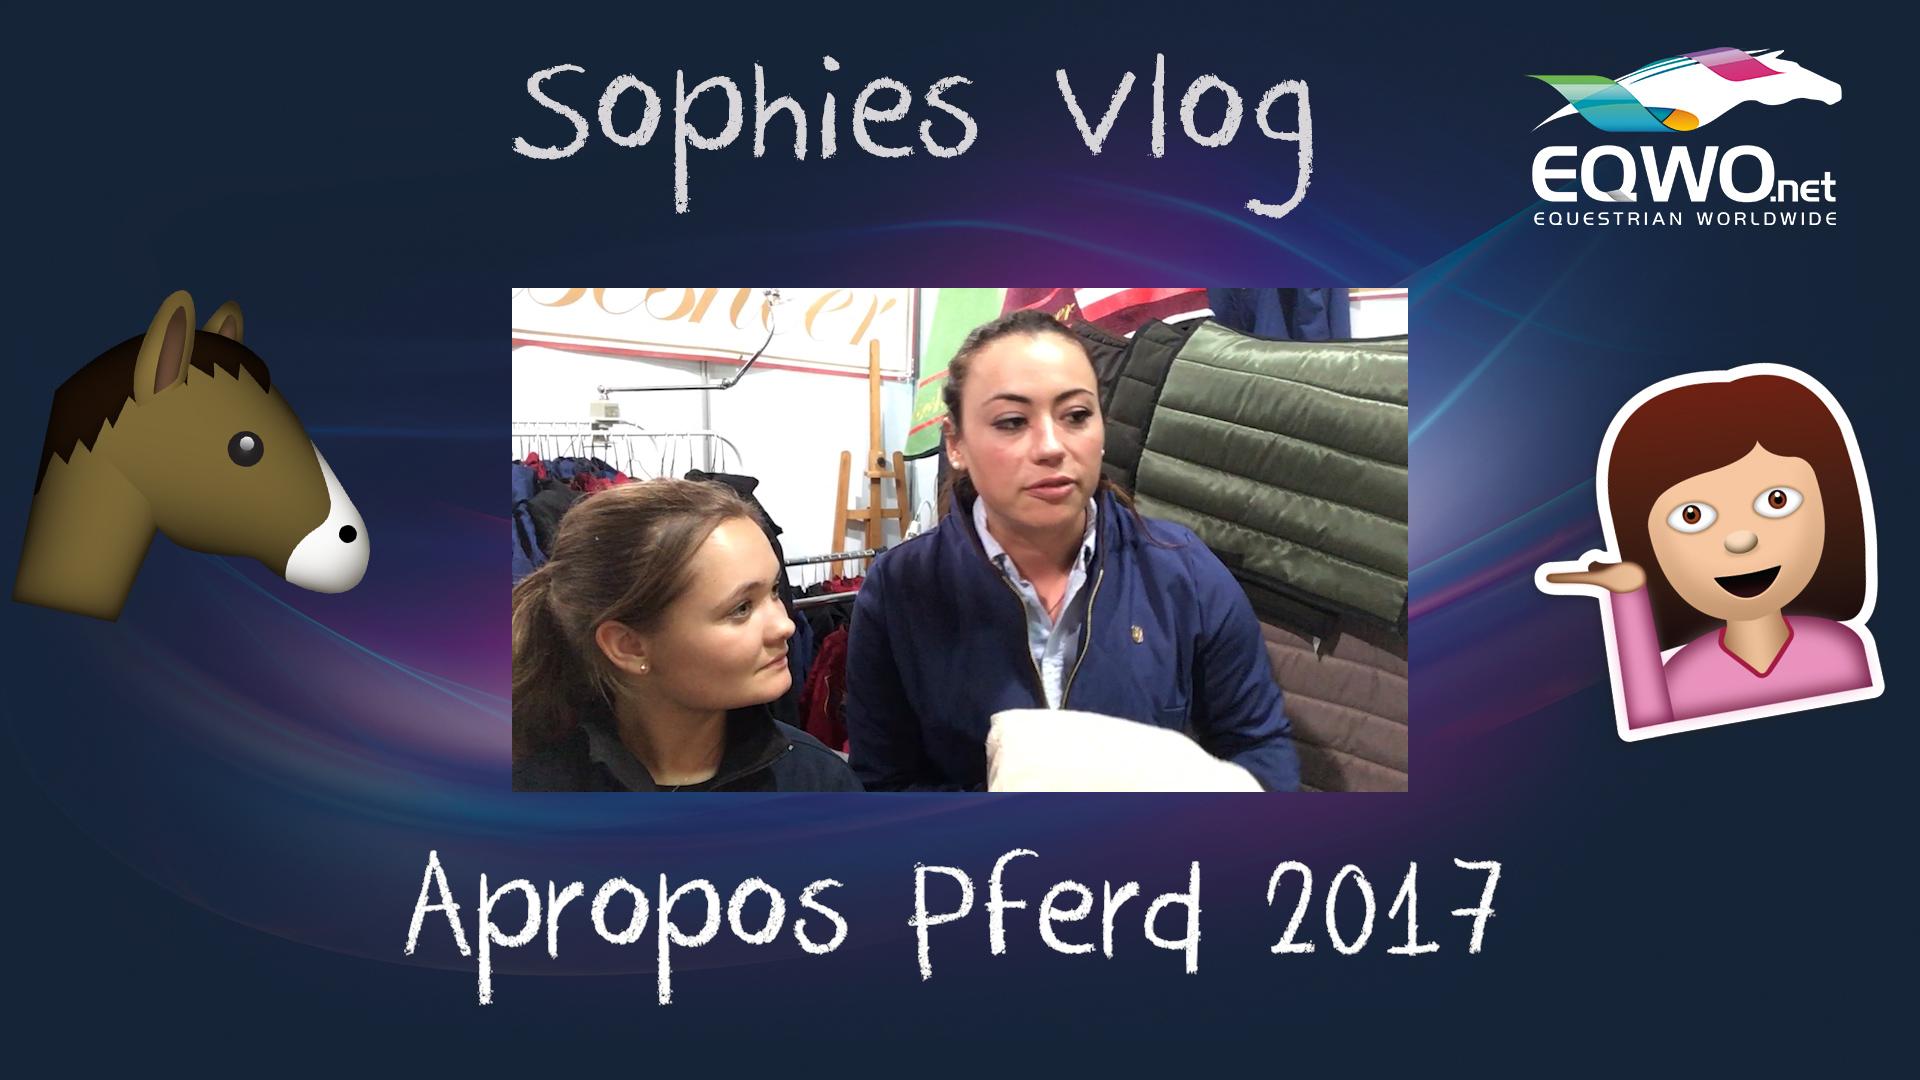 Sophies Vlog: Apropos Pferd 2017